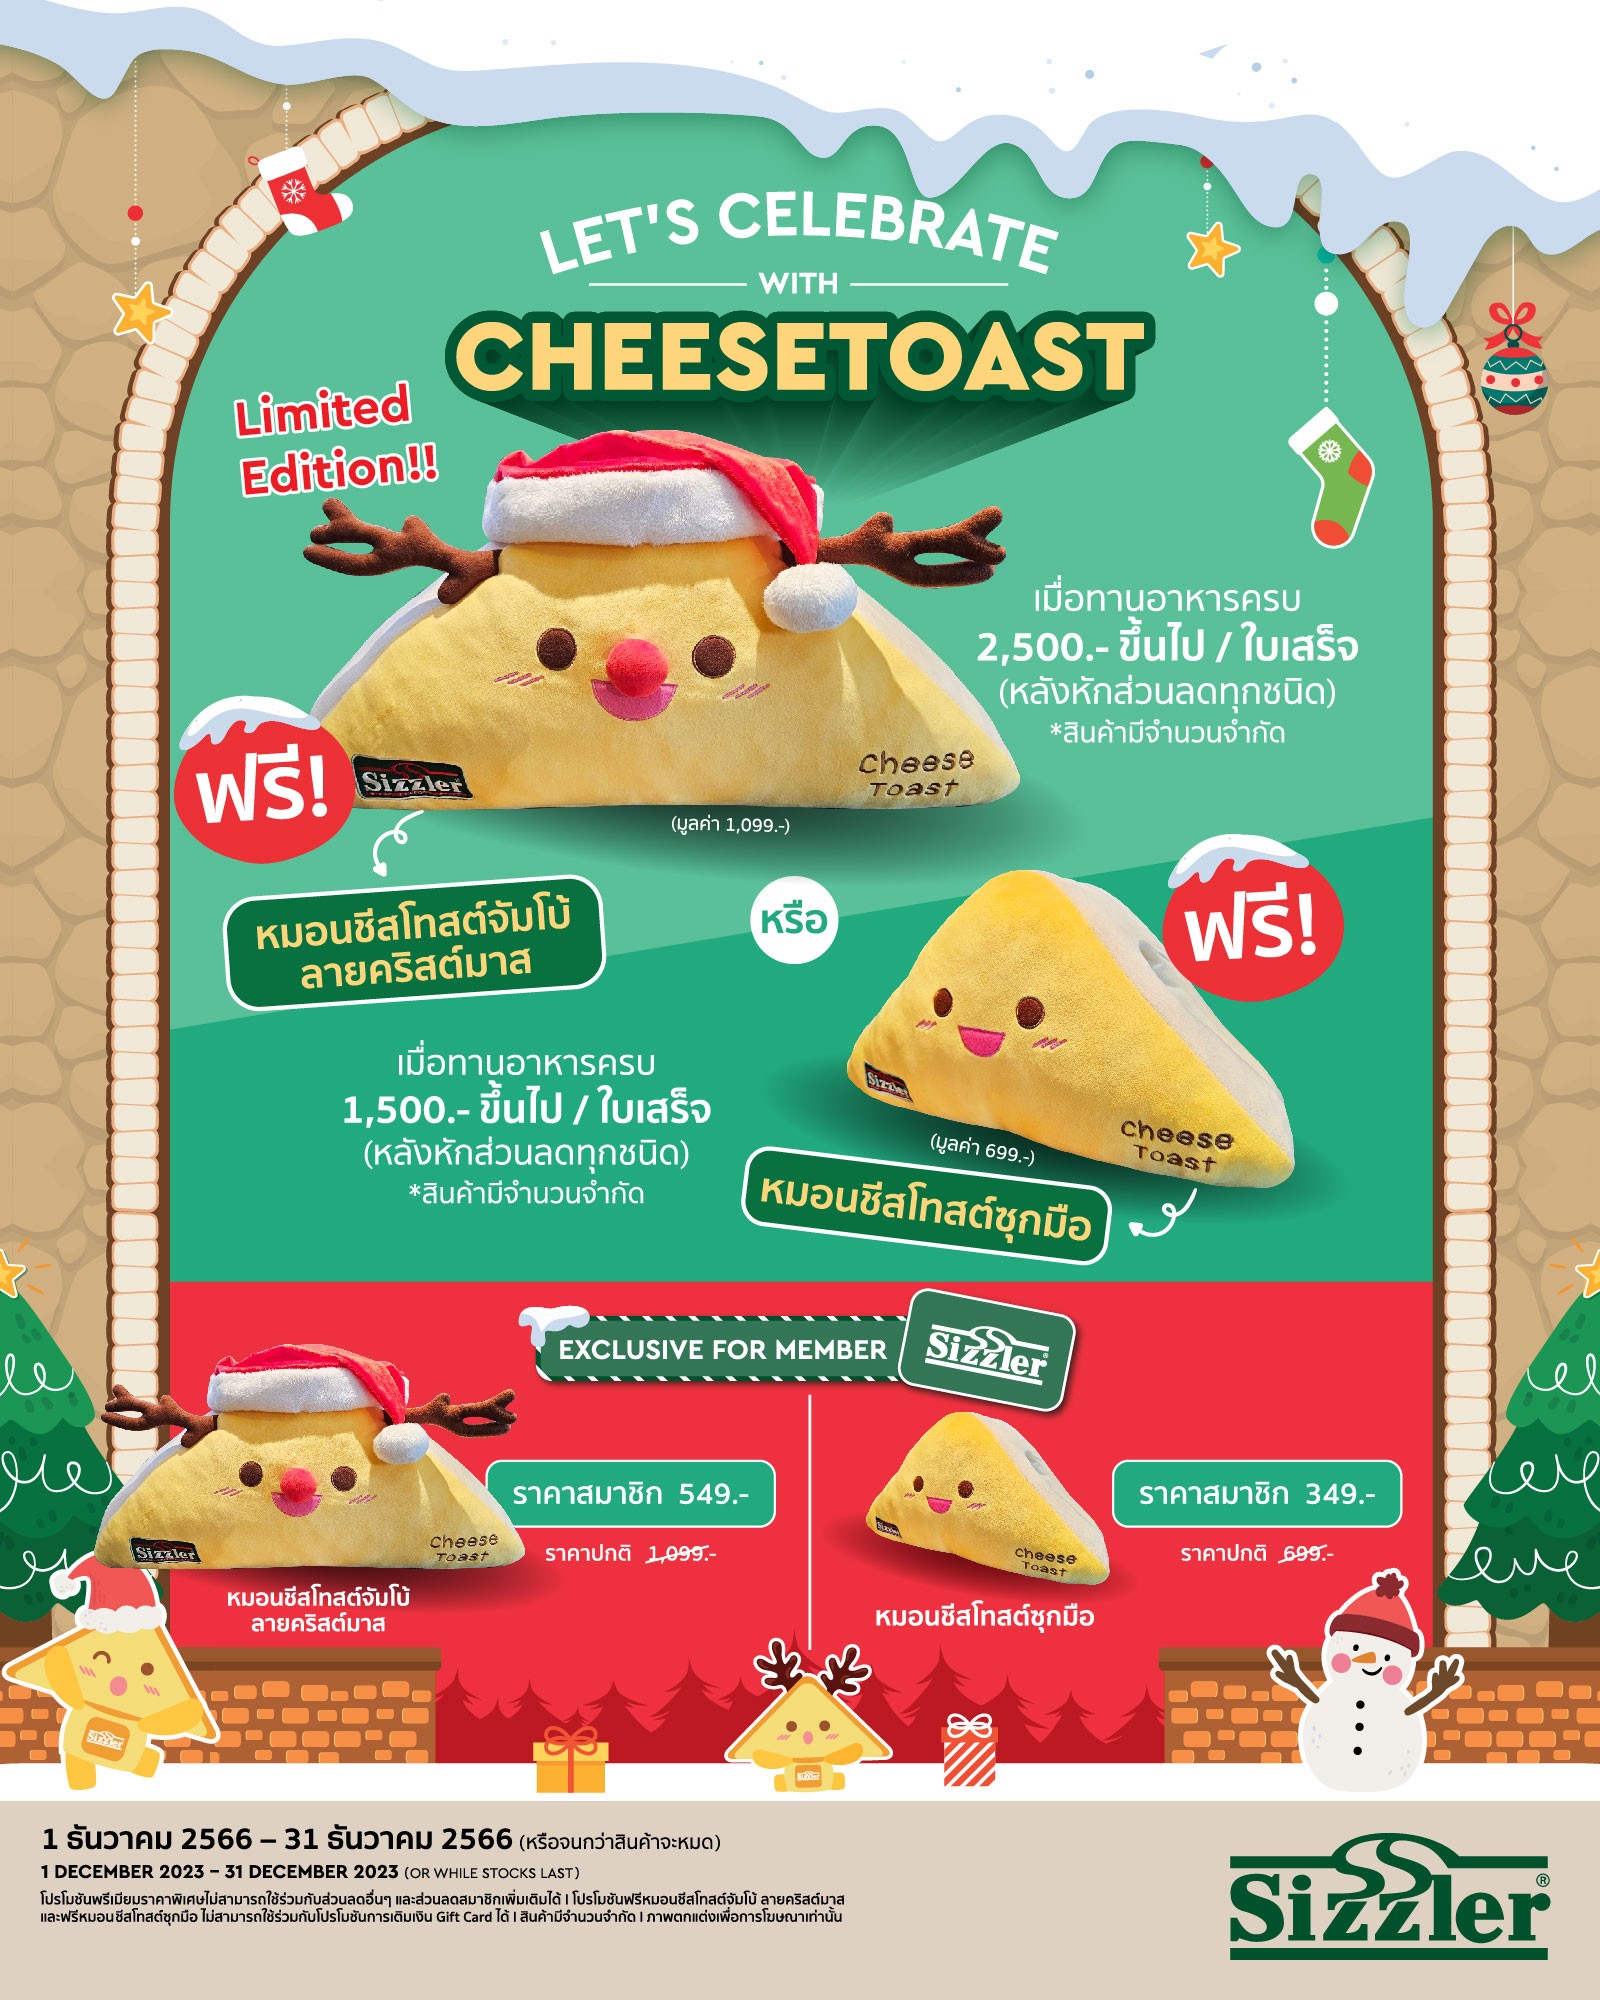 Cheese Toast Premium Gifts